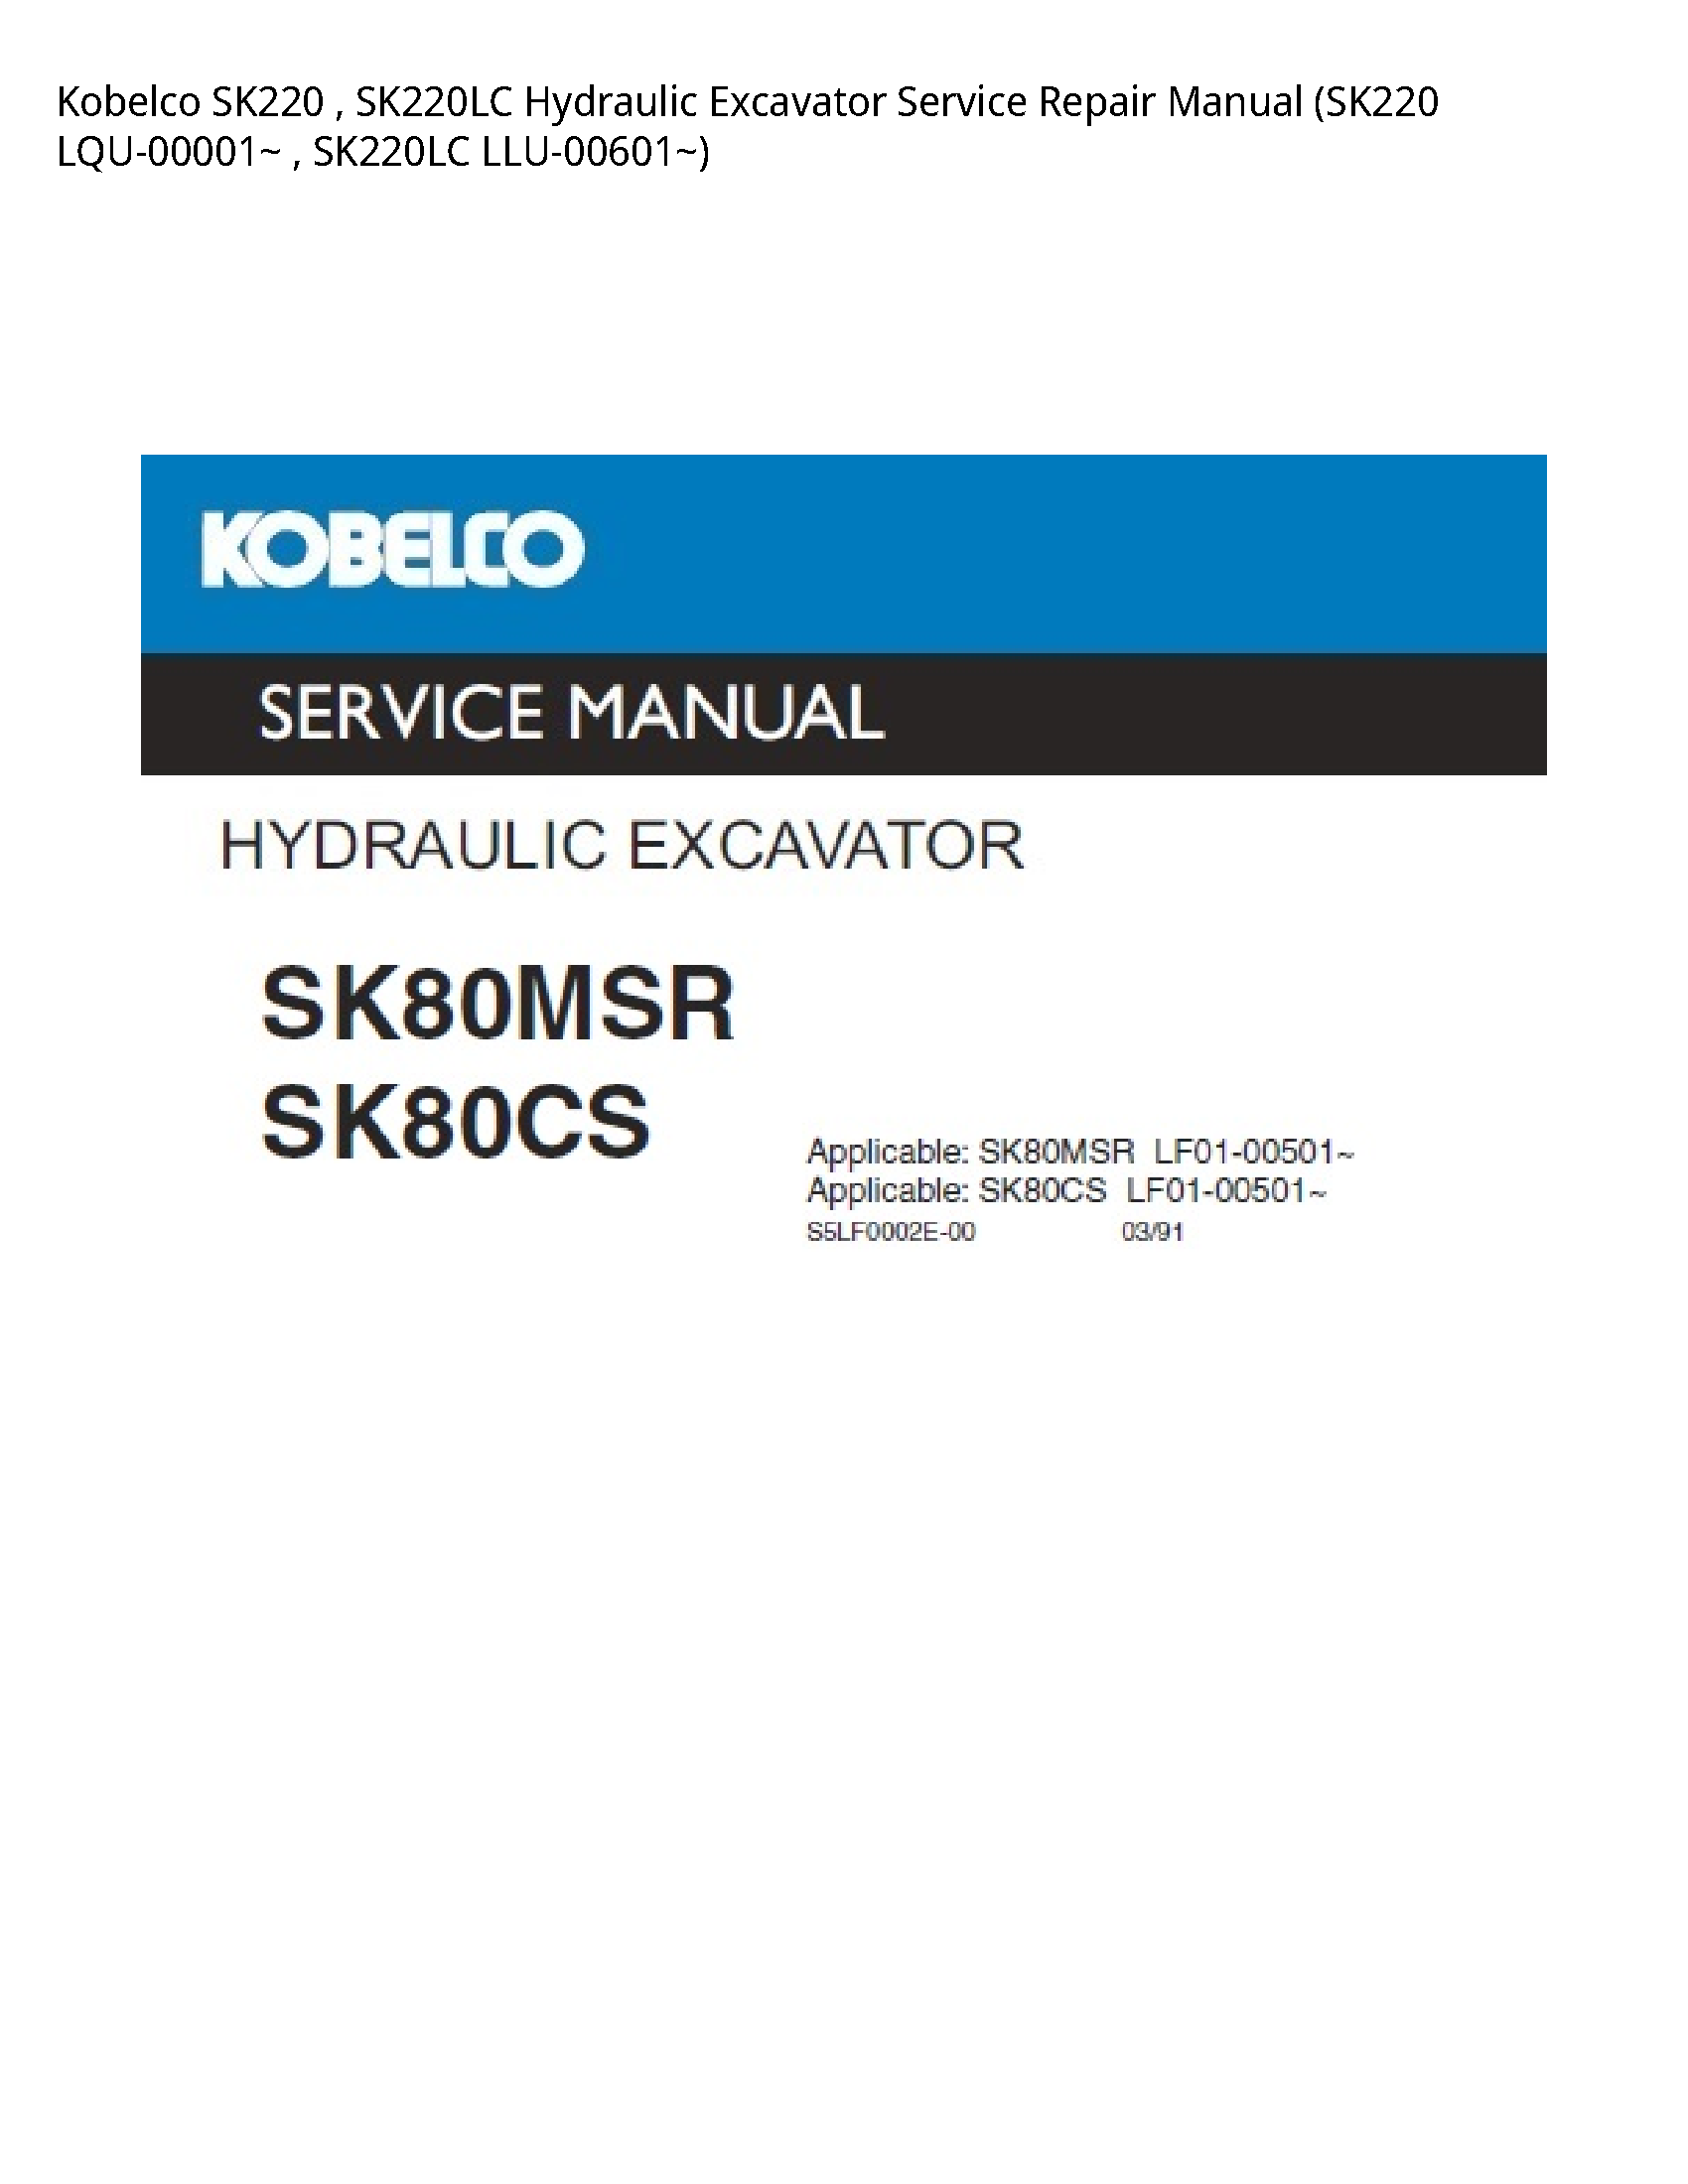 Kobelco SK220 Hydraulic Excavator manual